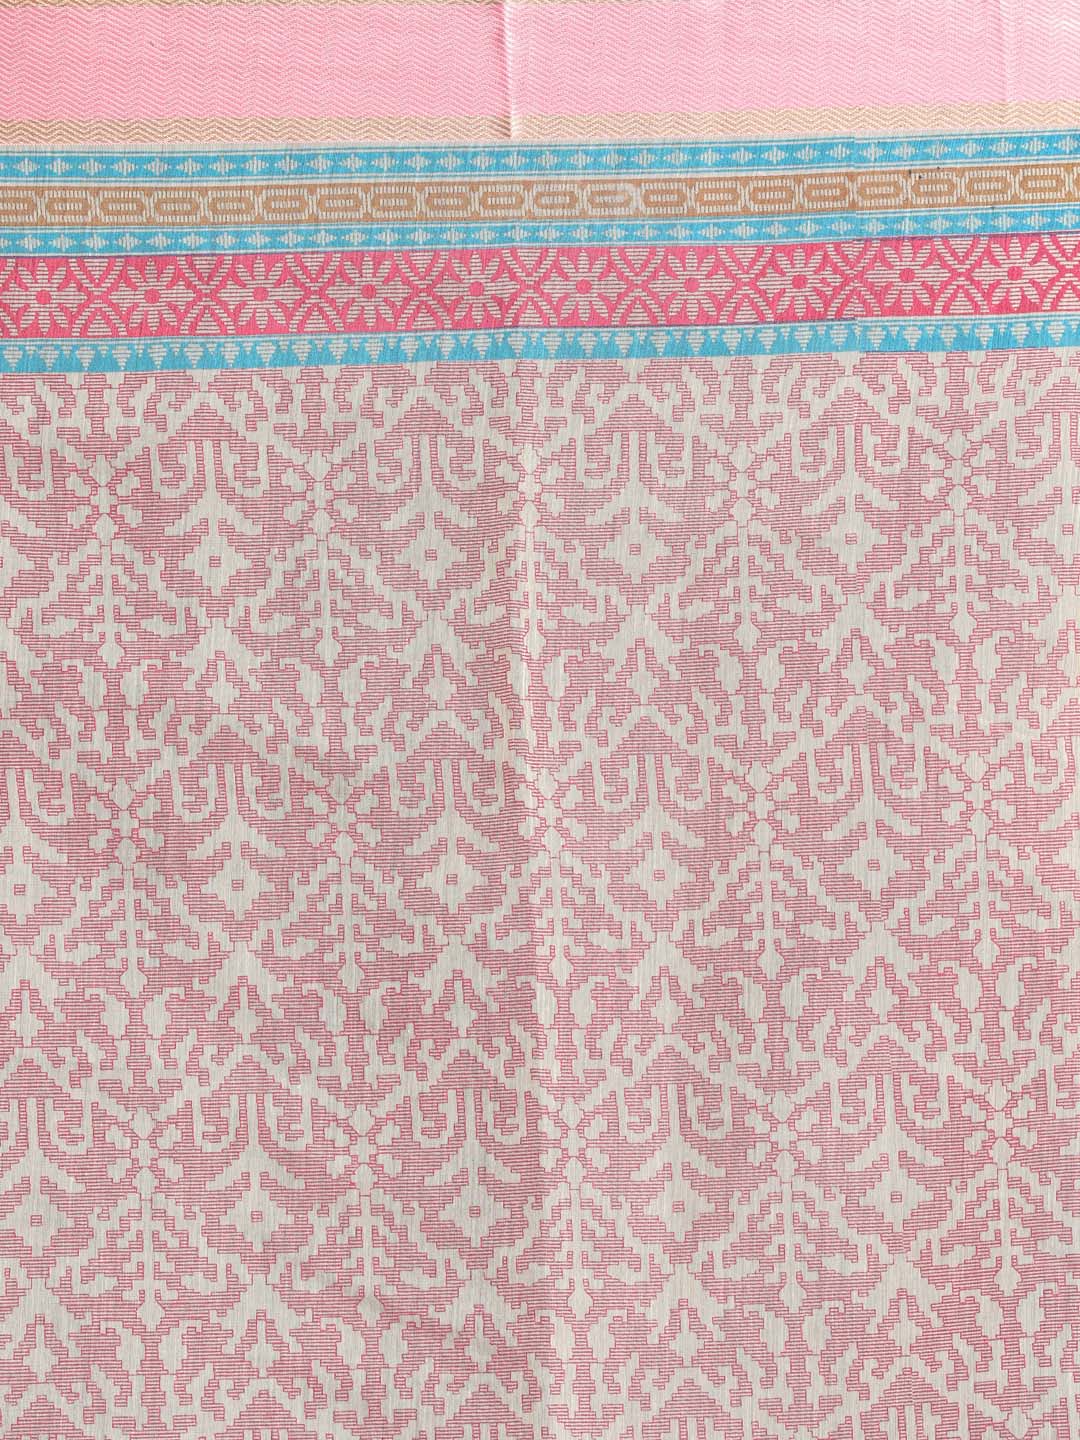 Indethnic Printed Cotton Blend Saree in Pink - Saree Detail View